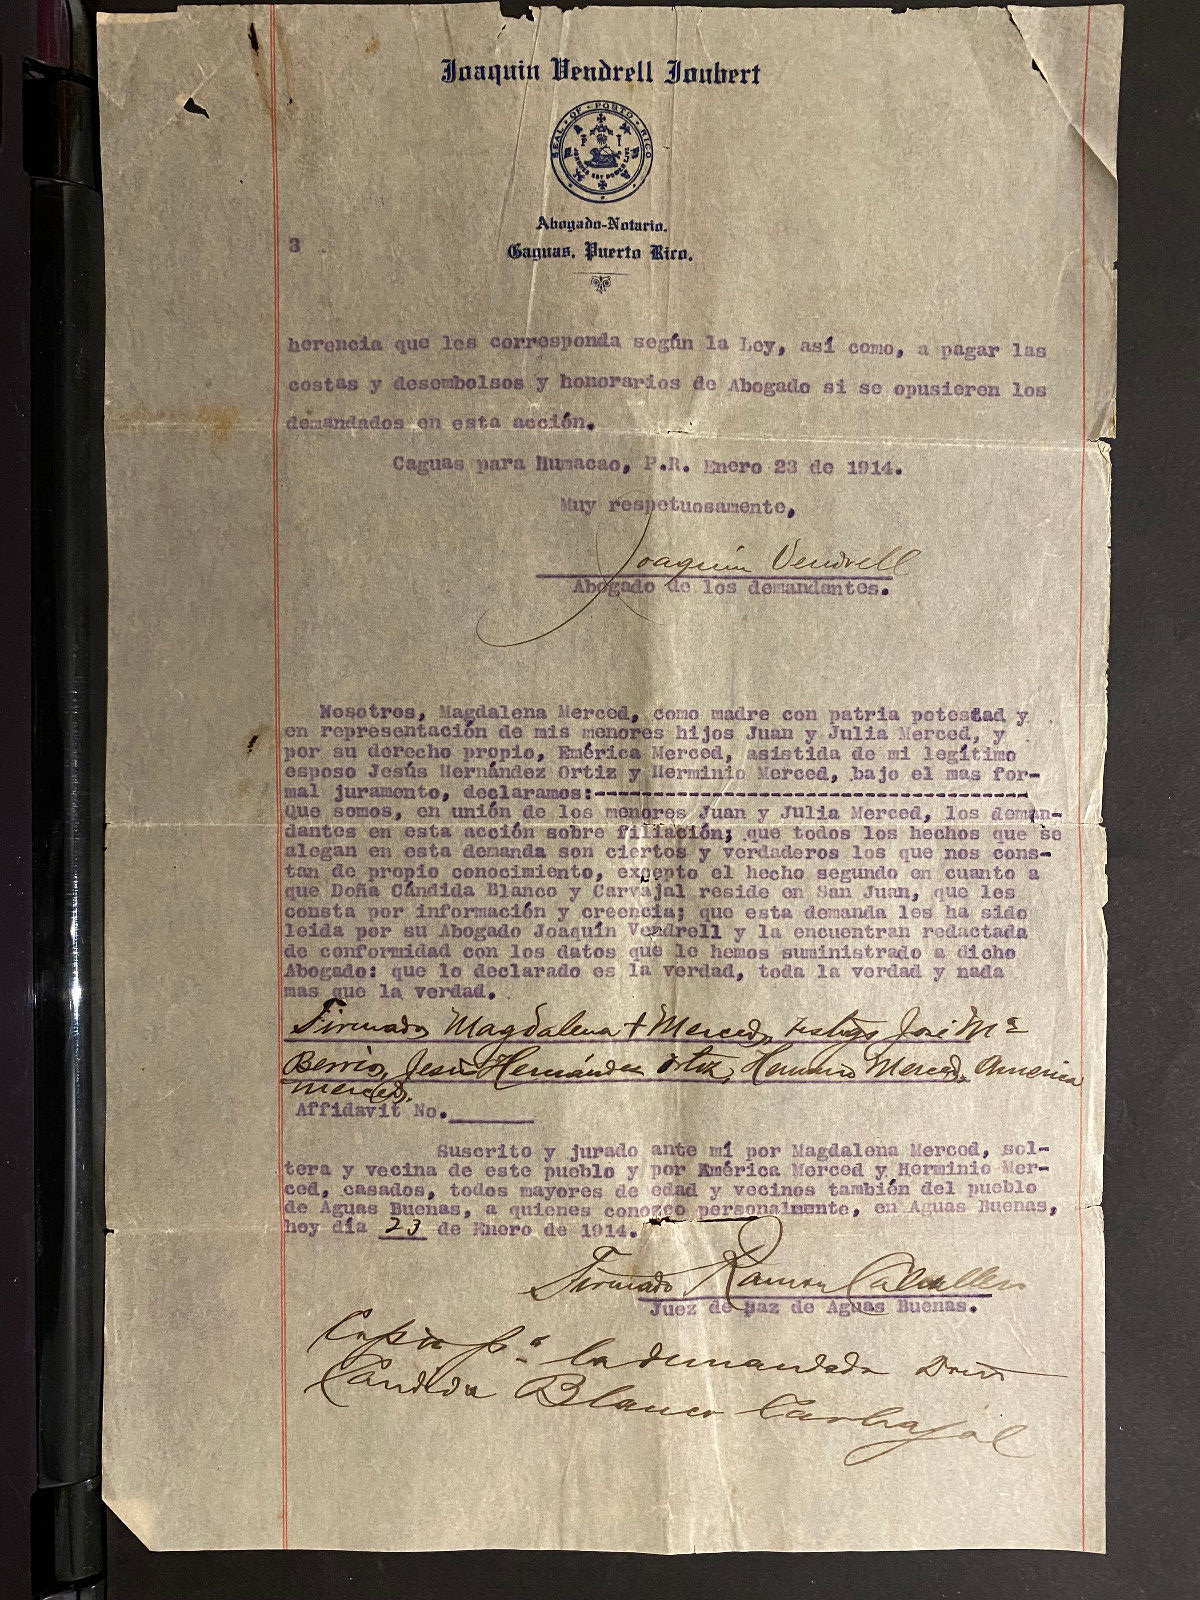 Puerto Rico 1914, CAGUAS, Carta Legal, Joaquin V. Joubert/Abogado, sin verificar